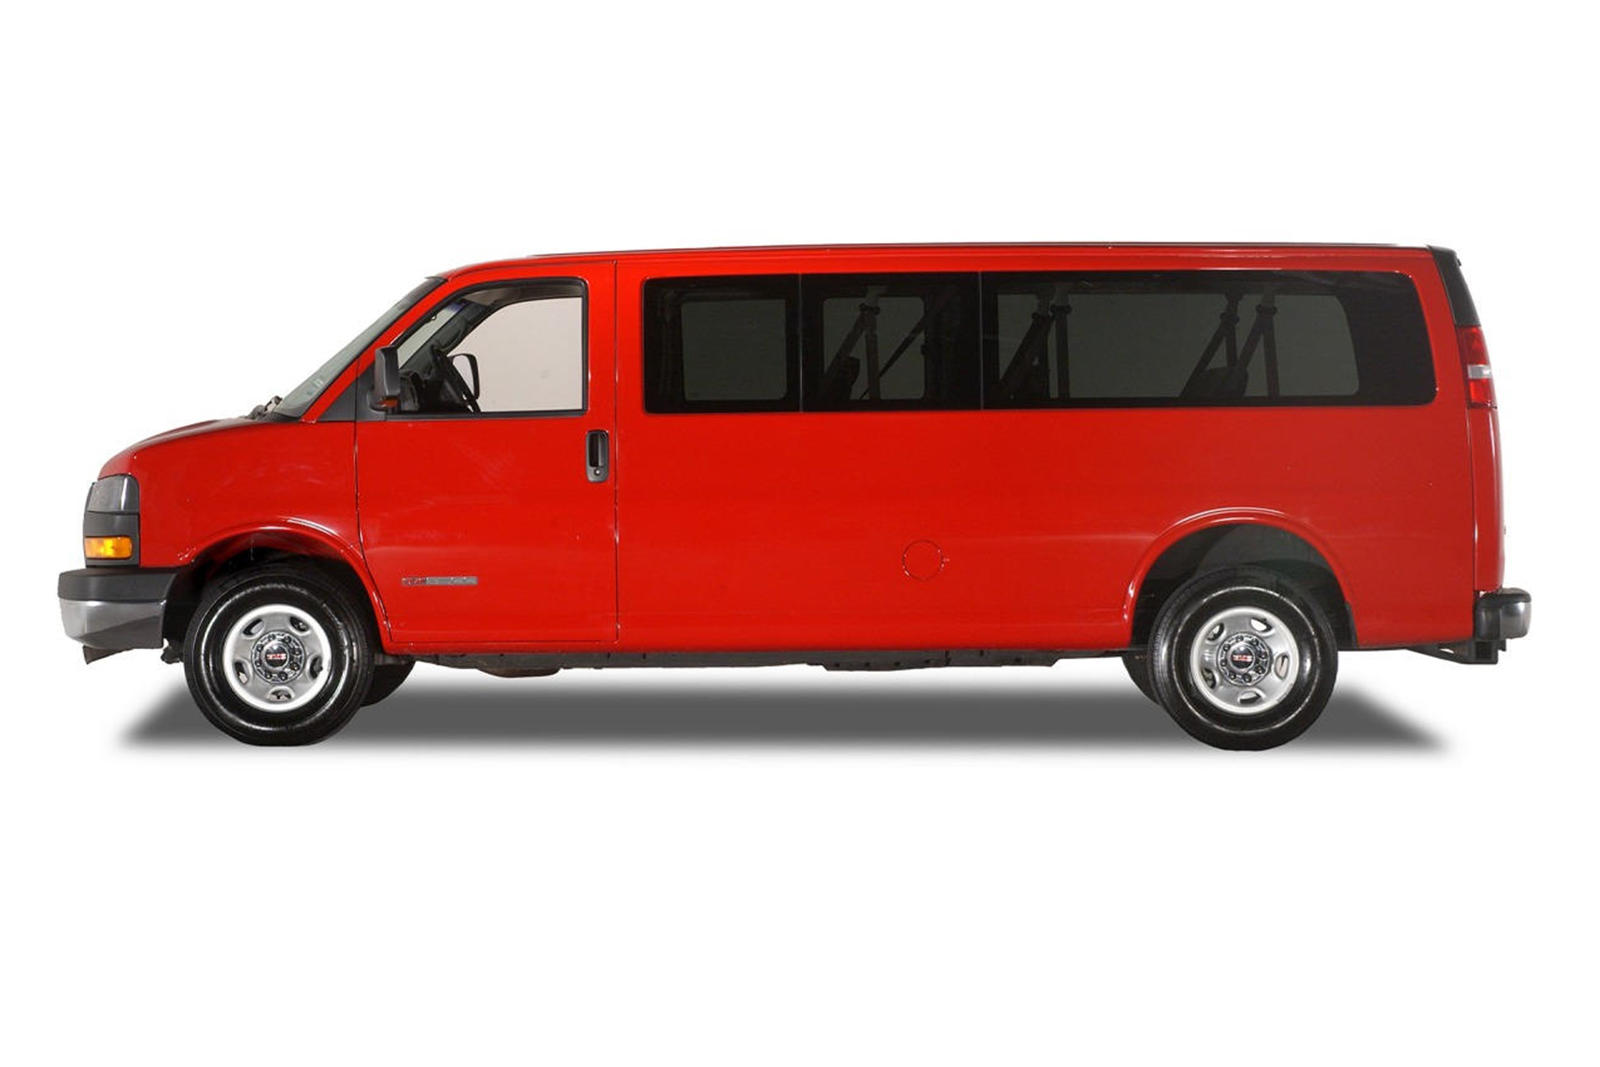 New 2022 Gmc Savana Passenger Van Lease At Autolux Salesleasing